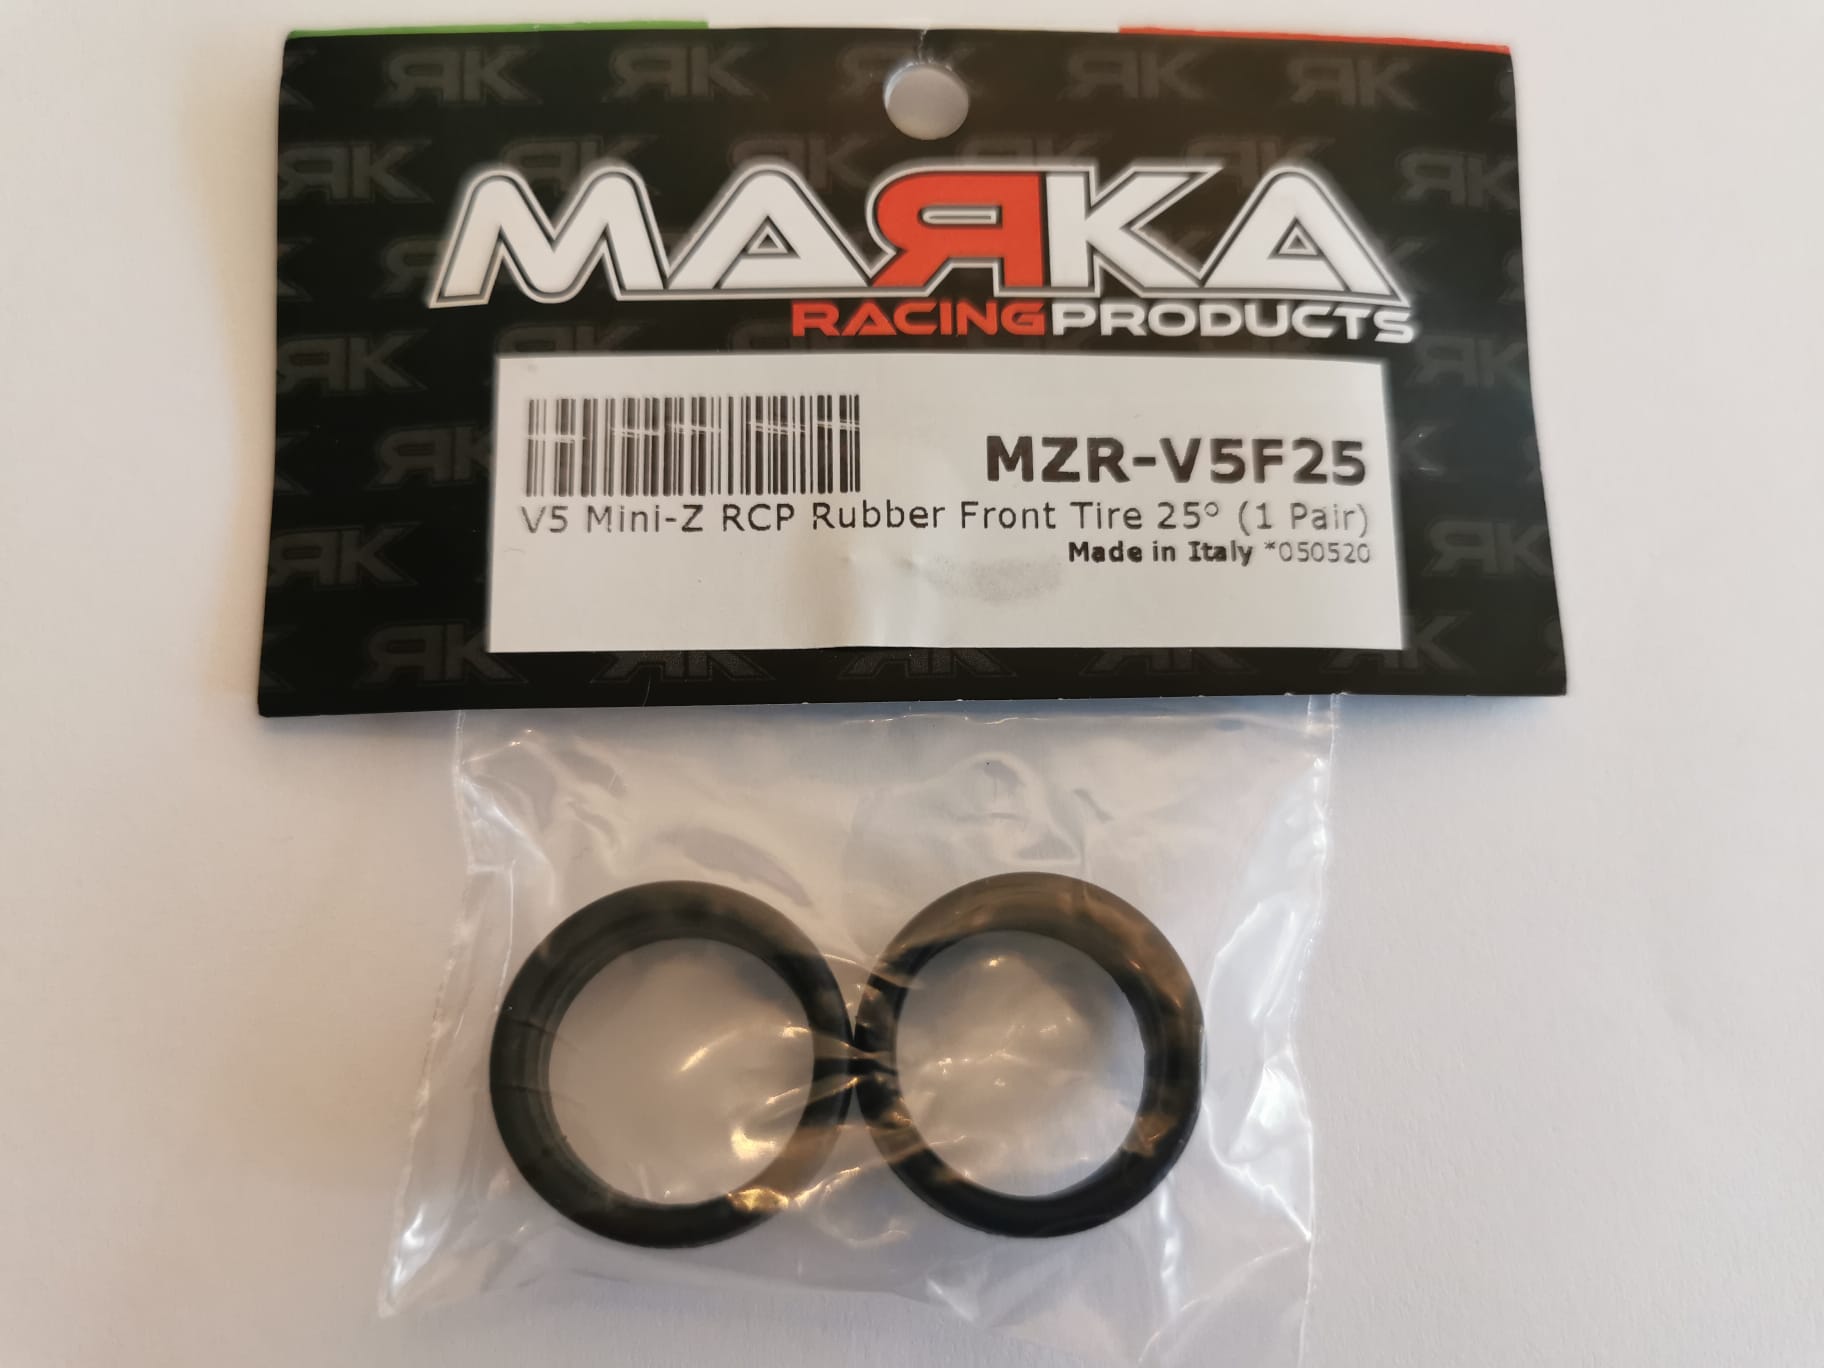 Marka V5 Mini-Z RCP Rubber Front Tire 25° (1 Pair) (MZR-V5F25)